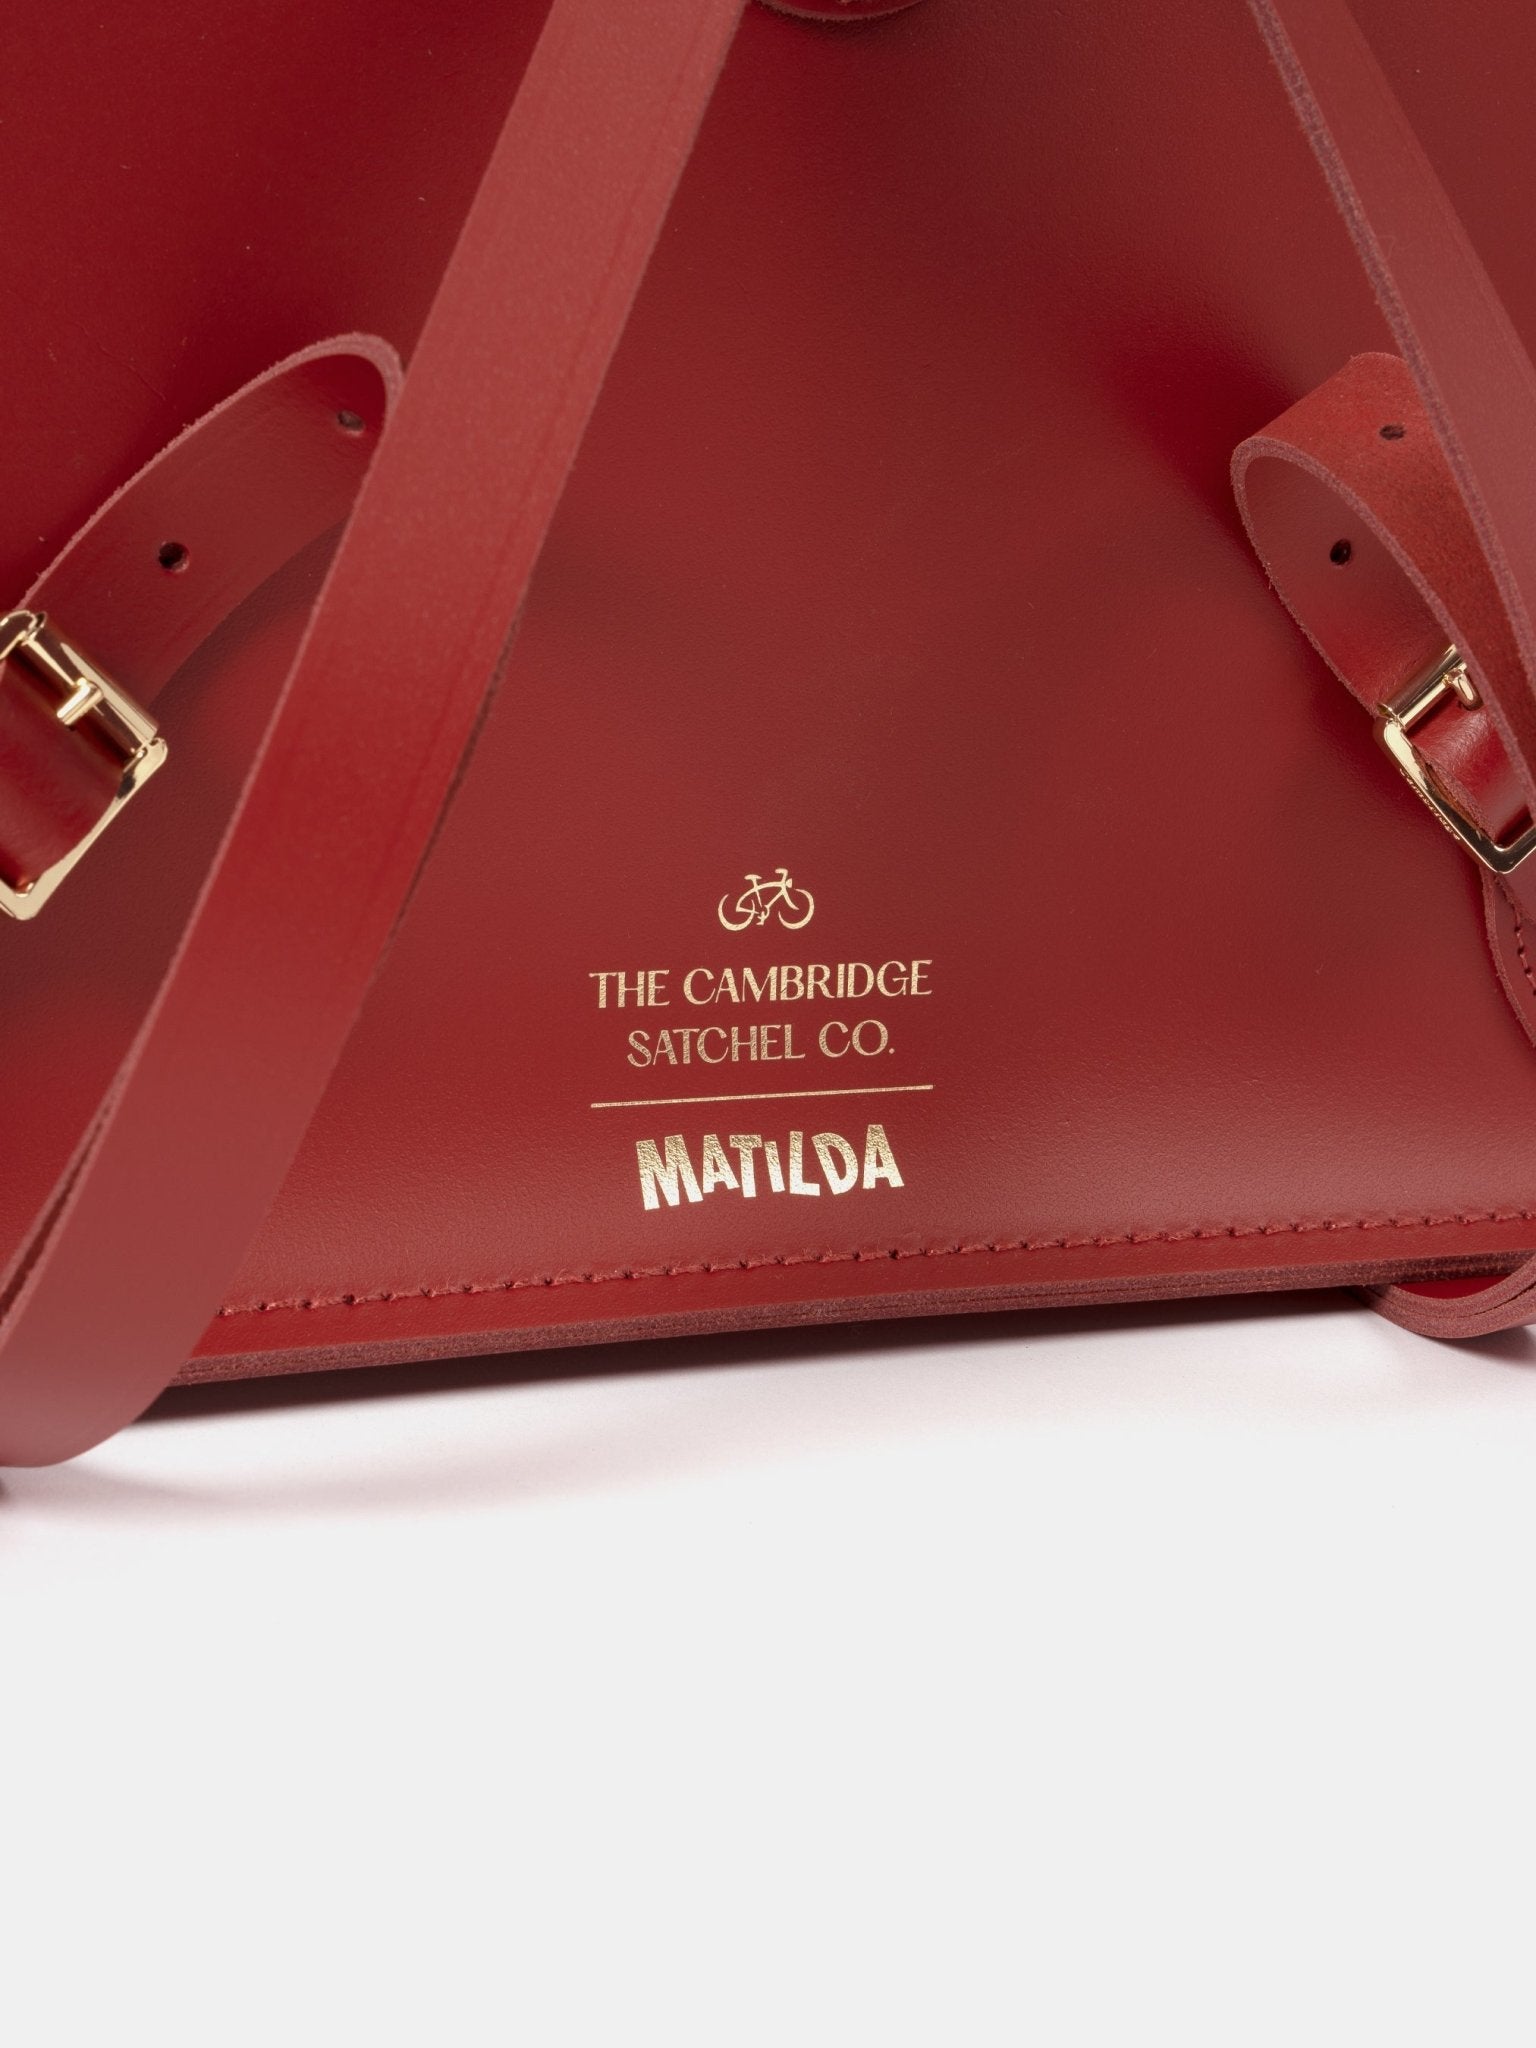 The Matilda Batchel Backpack - Red - The Cambridge Satchel Company EU Store